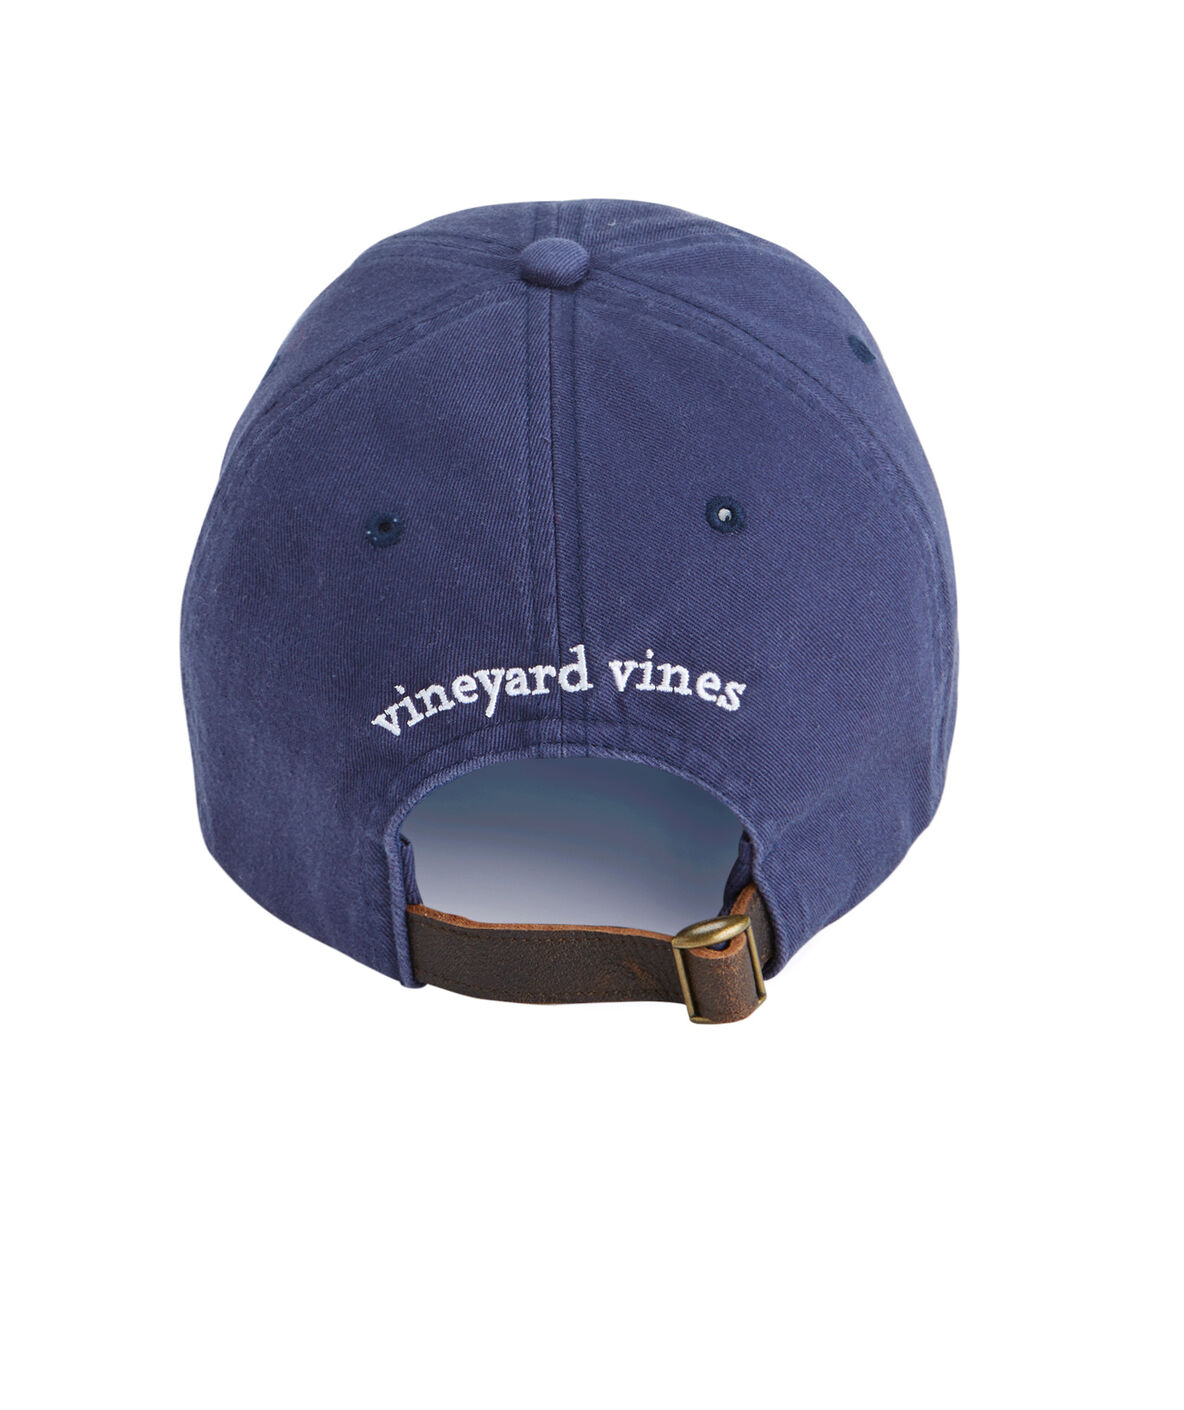 Vineyard Vines Men's Island Washed Twill Baseball Hat - Ocean Sky